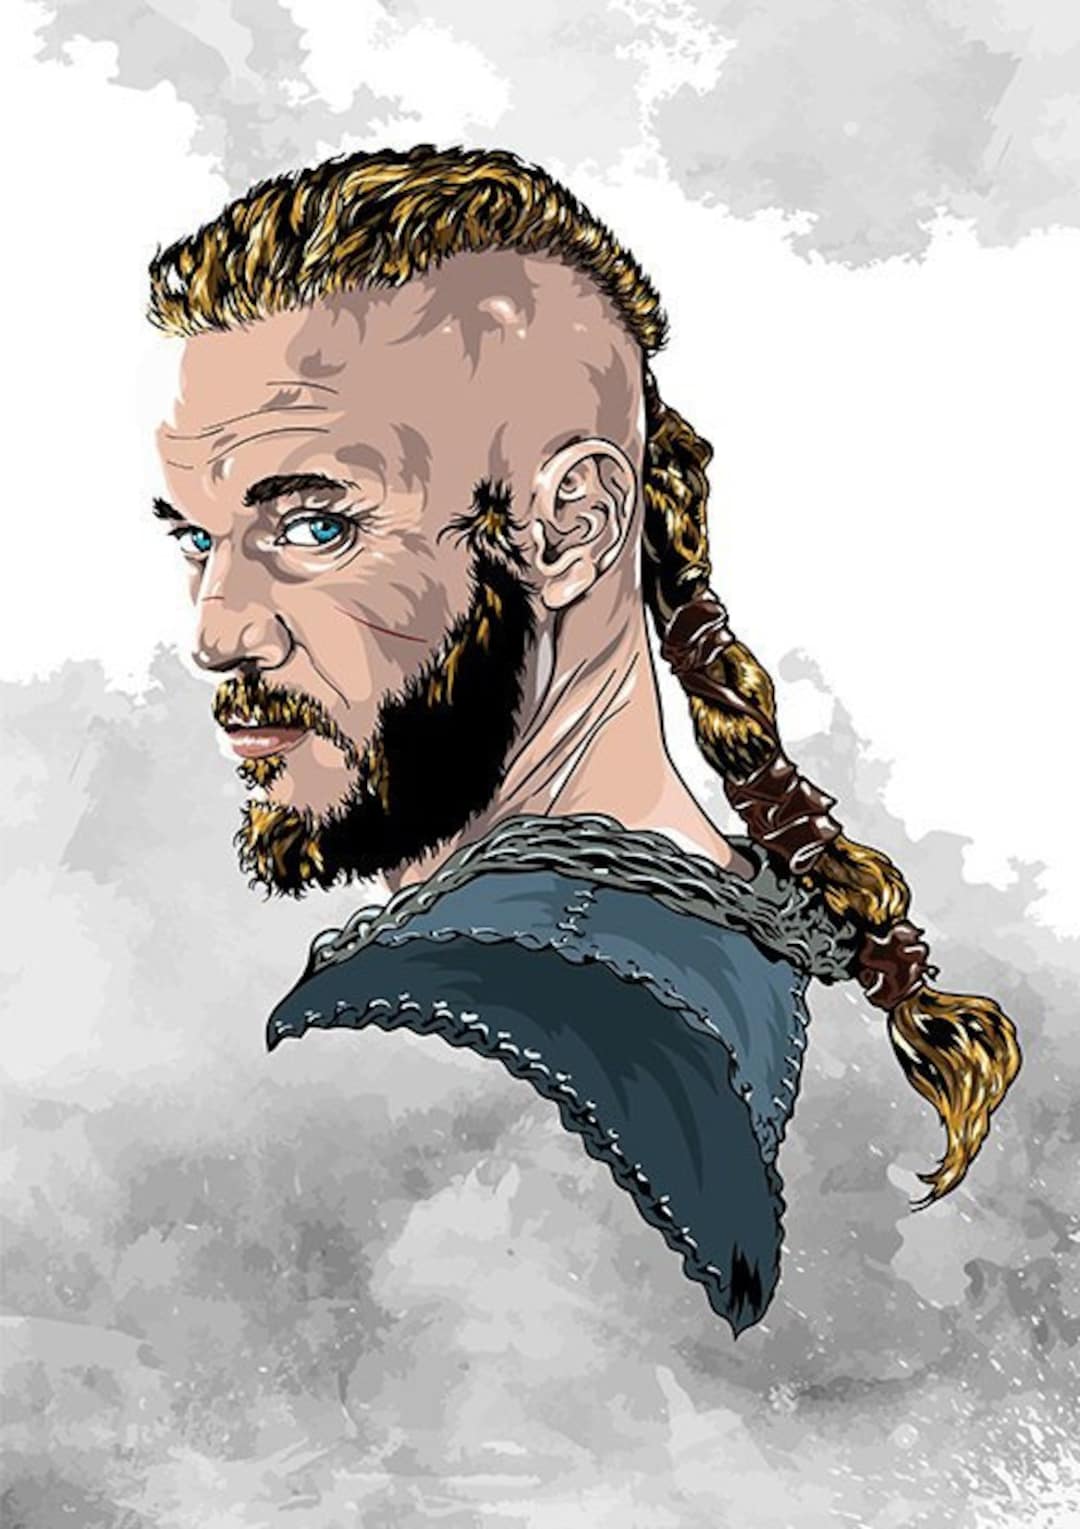 It Takes Two - Ragnar Games